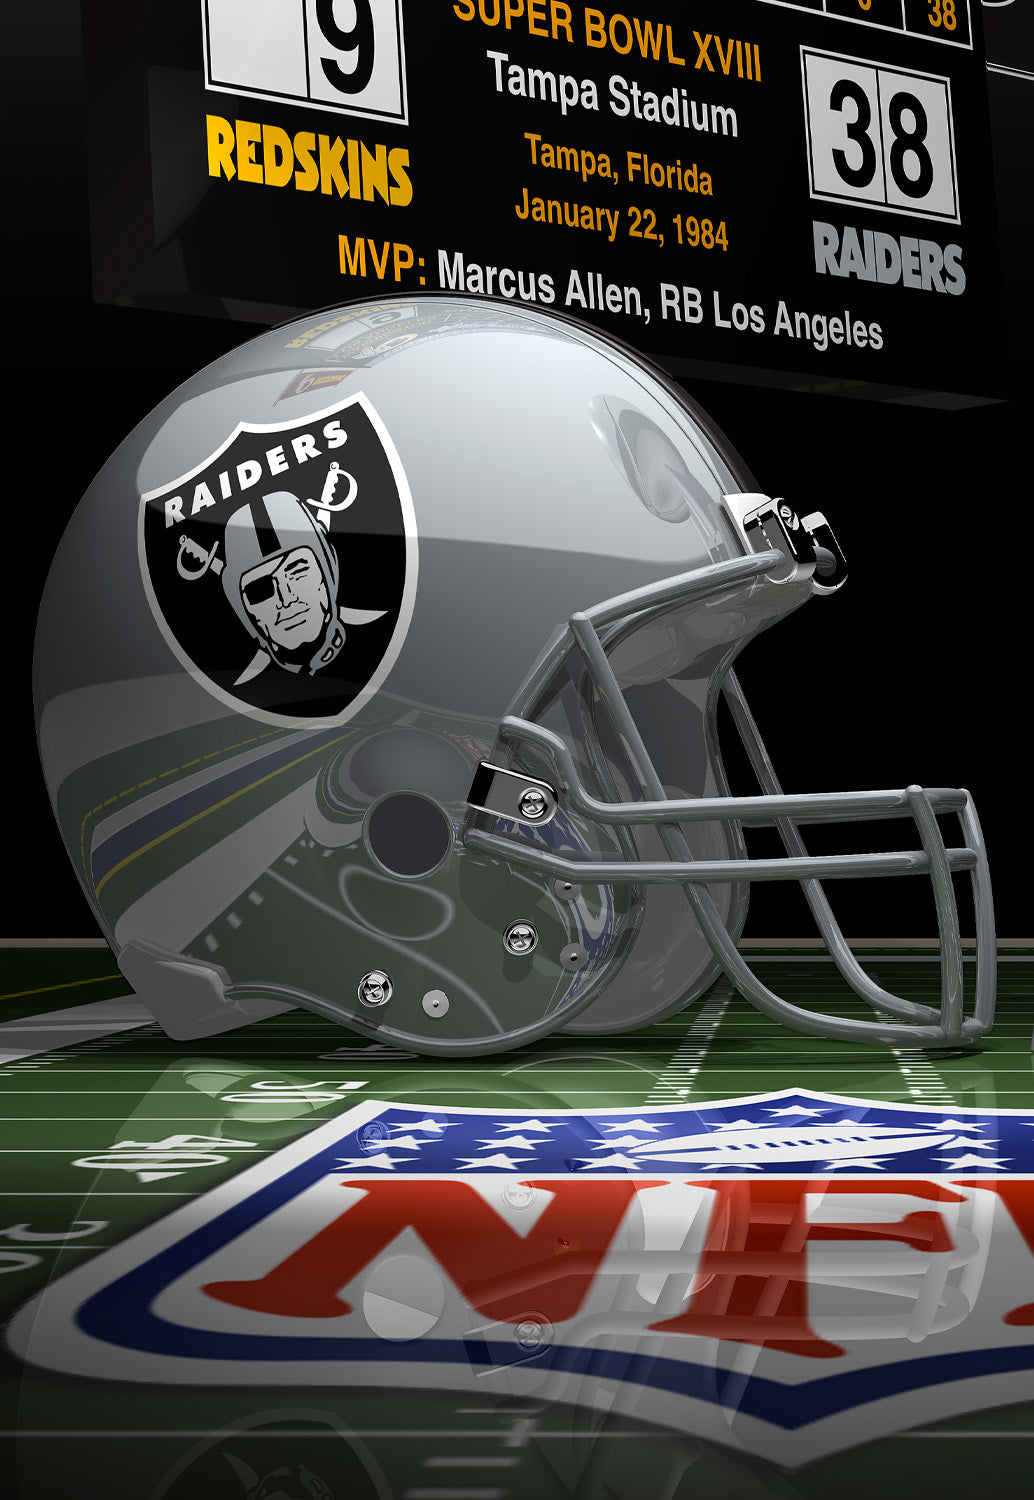 Los Angeles Raiders, Super Bowl XVIII Champions